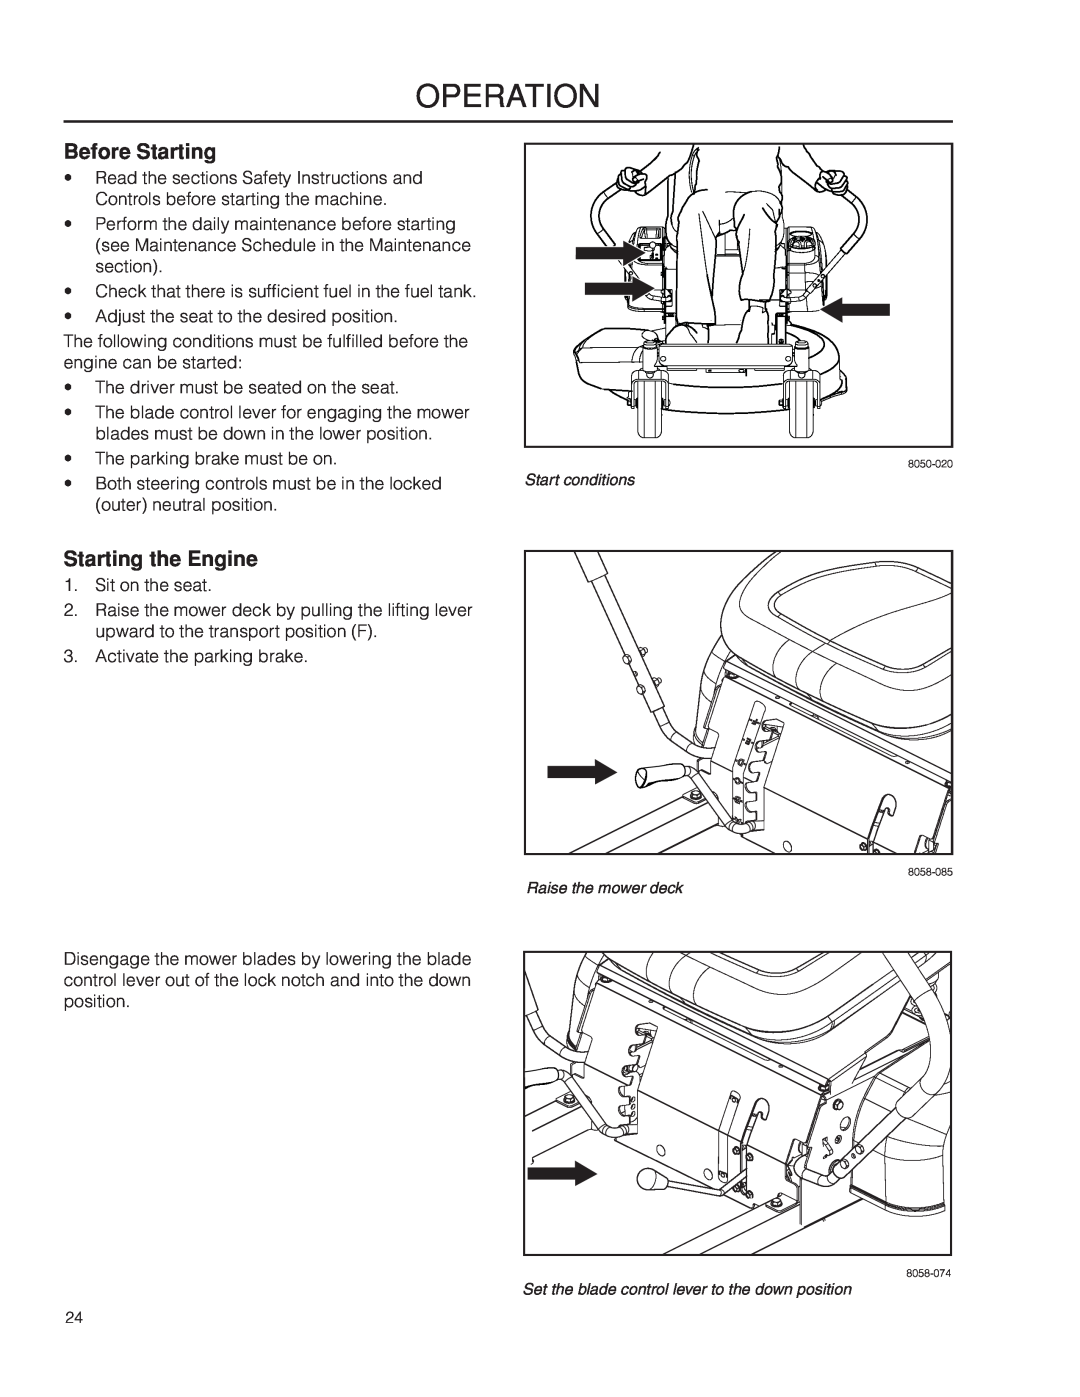 Husqvarna RZ19 CE / 966658901 manual Before Starting, Starting the Engine, operation 